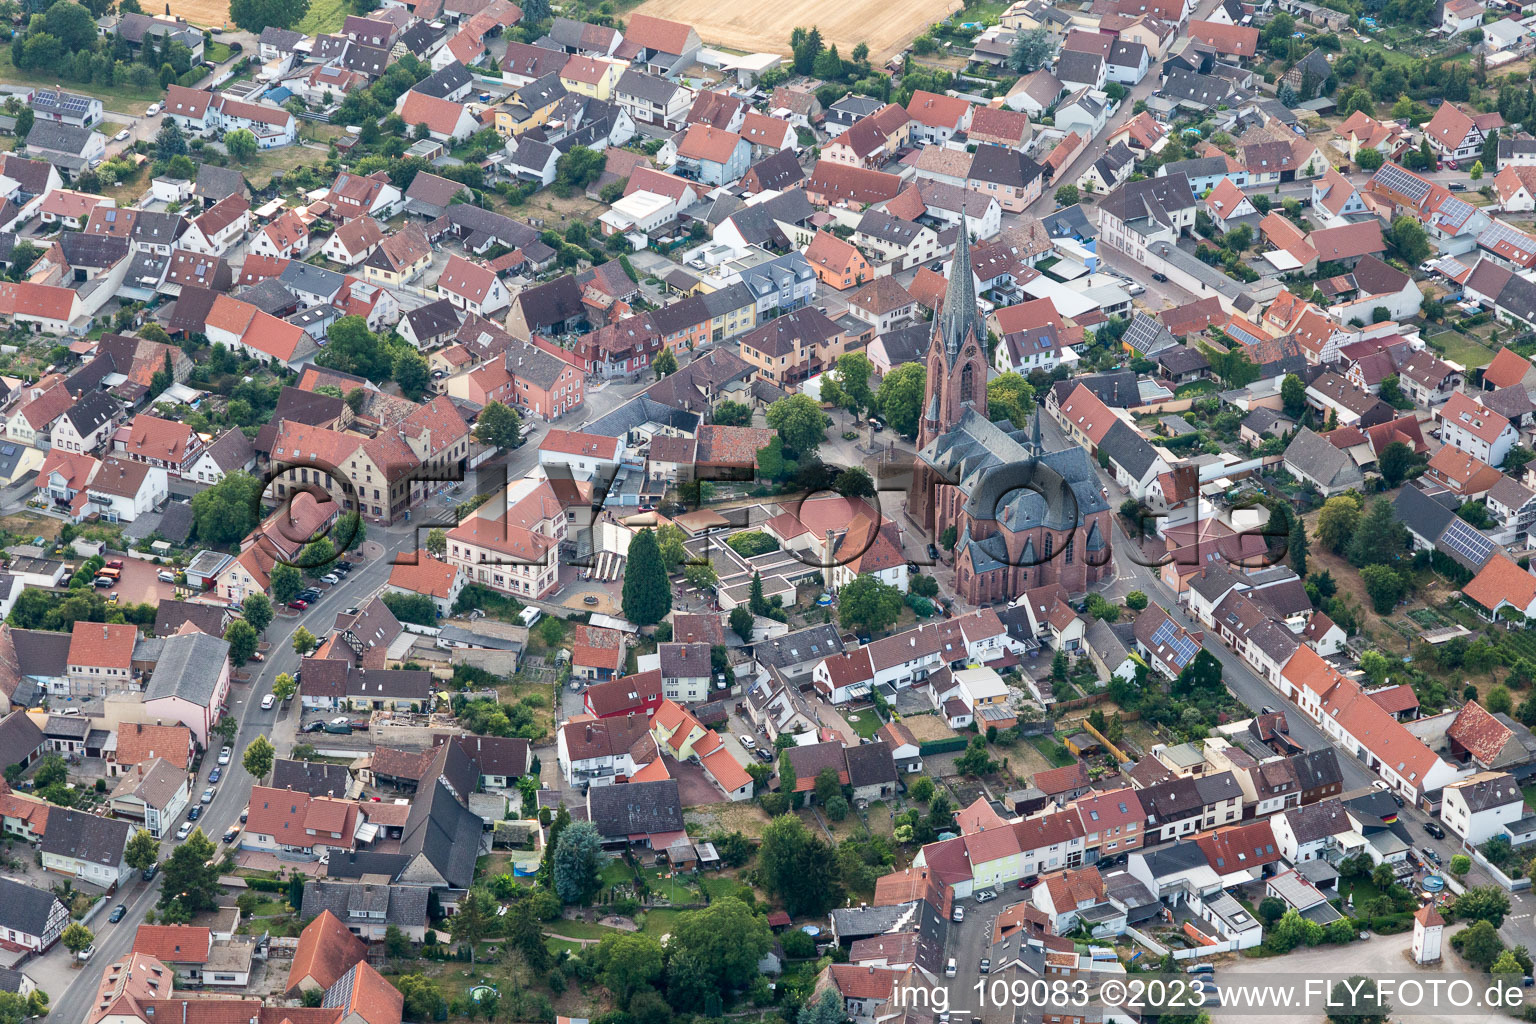 St Vitus in the district Rheinsheim in Philippsburg in the state Baden-Wuerttemberg, Germany